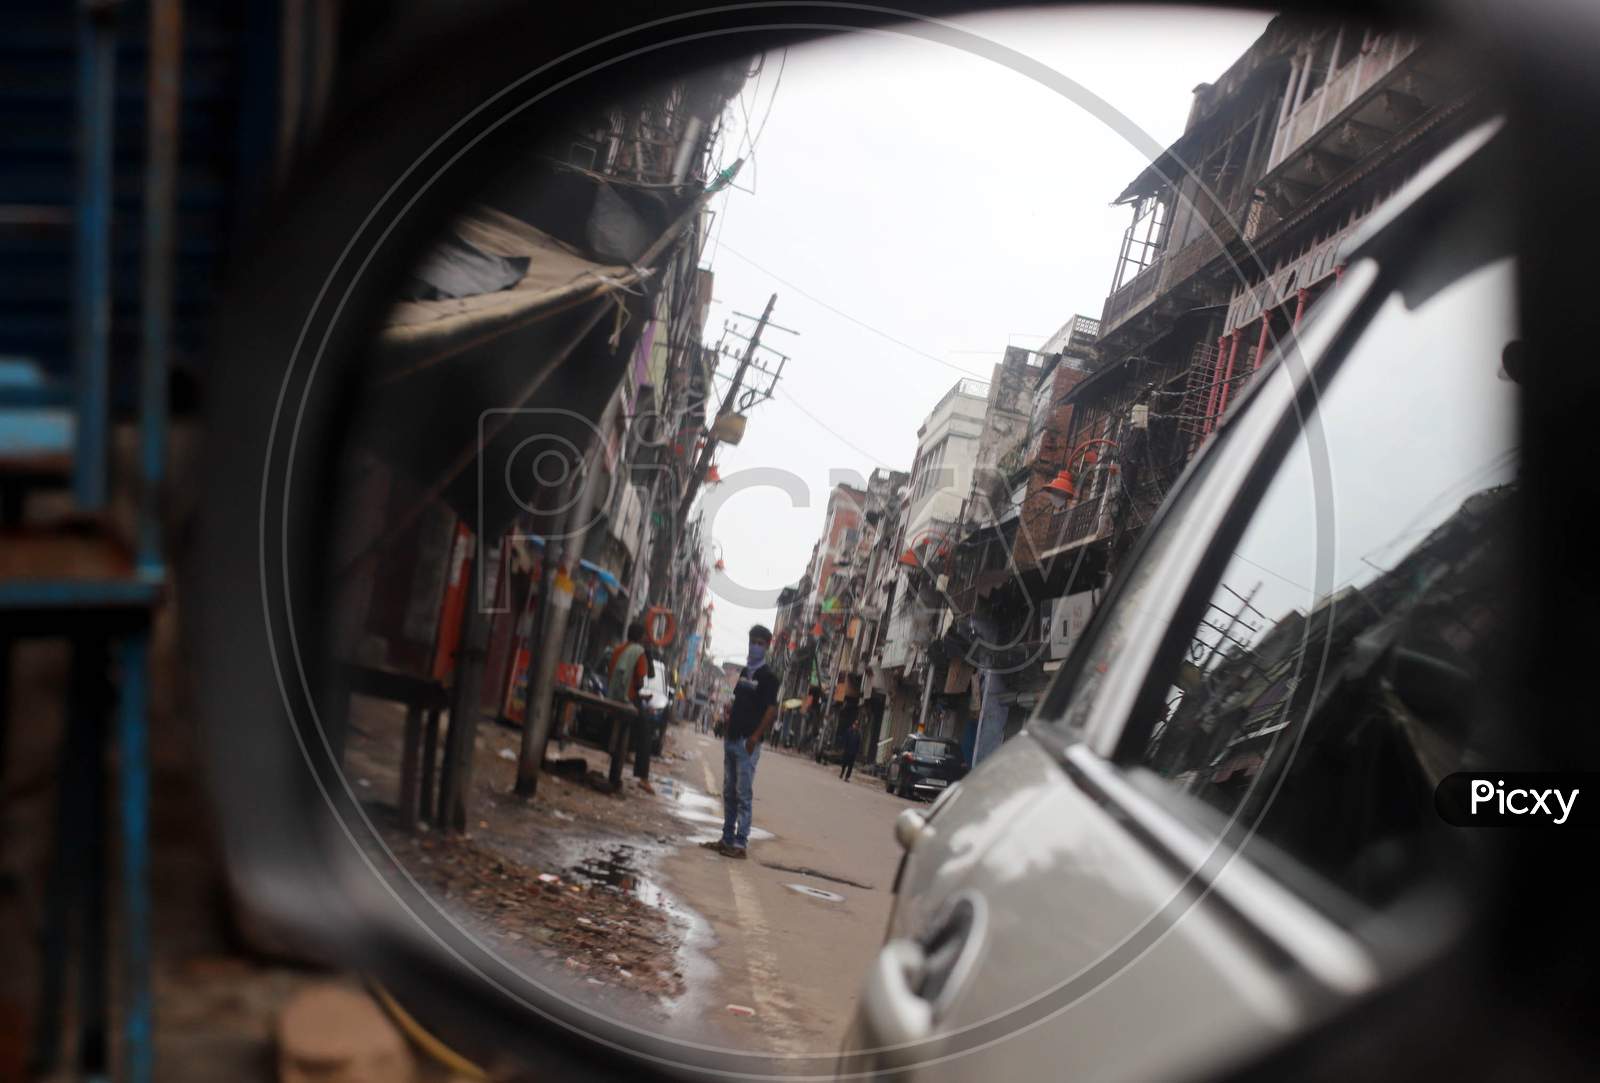 A view of the closed market during the lockdown in Prayagraj, Uttar Pradesh on July 12, 2020